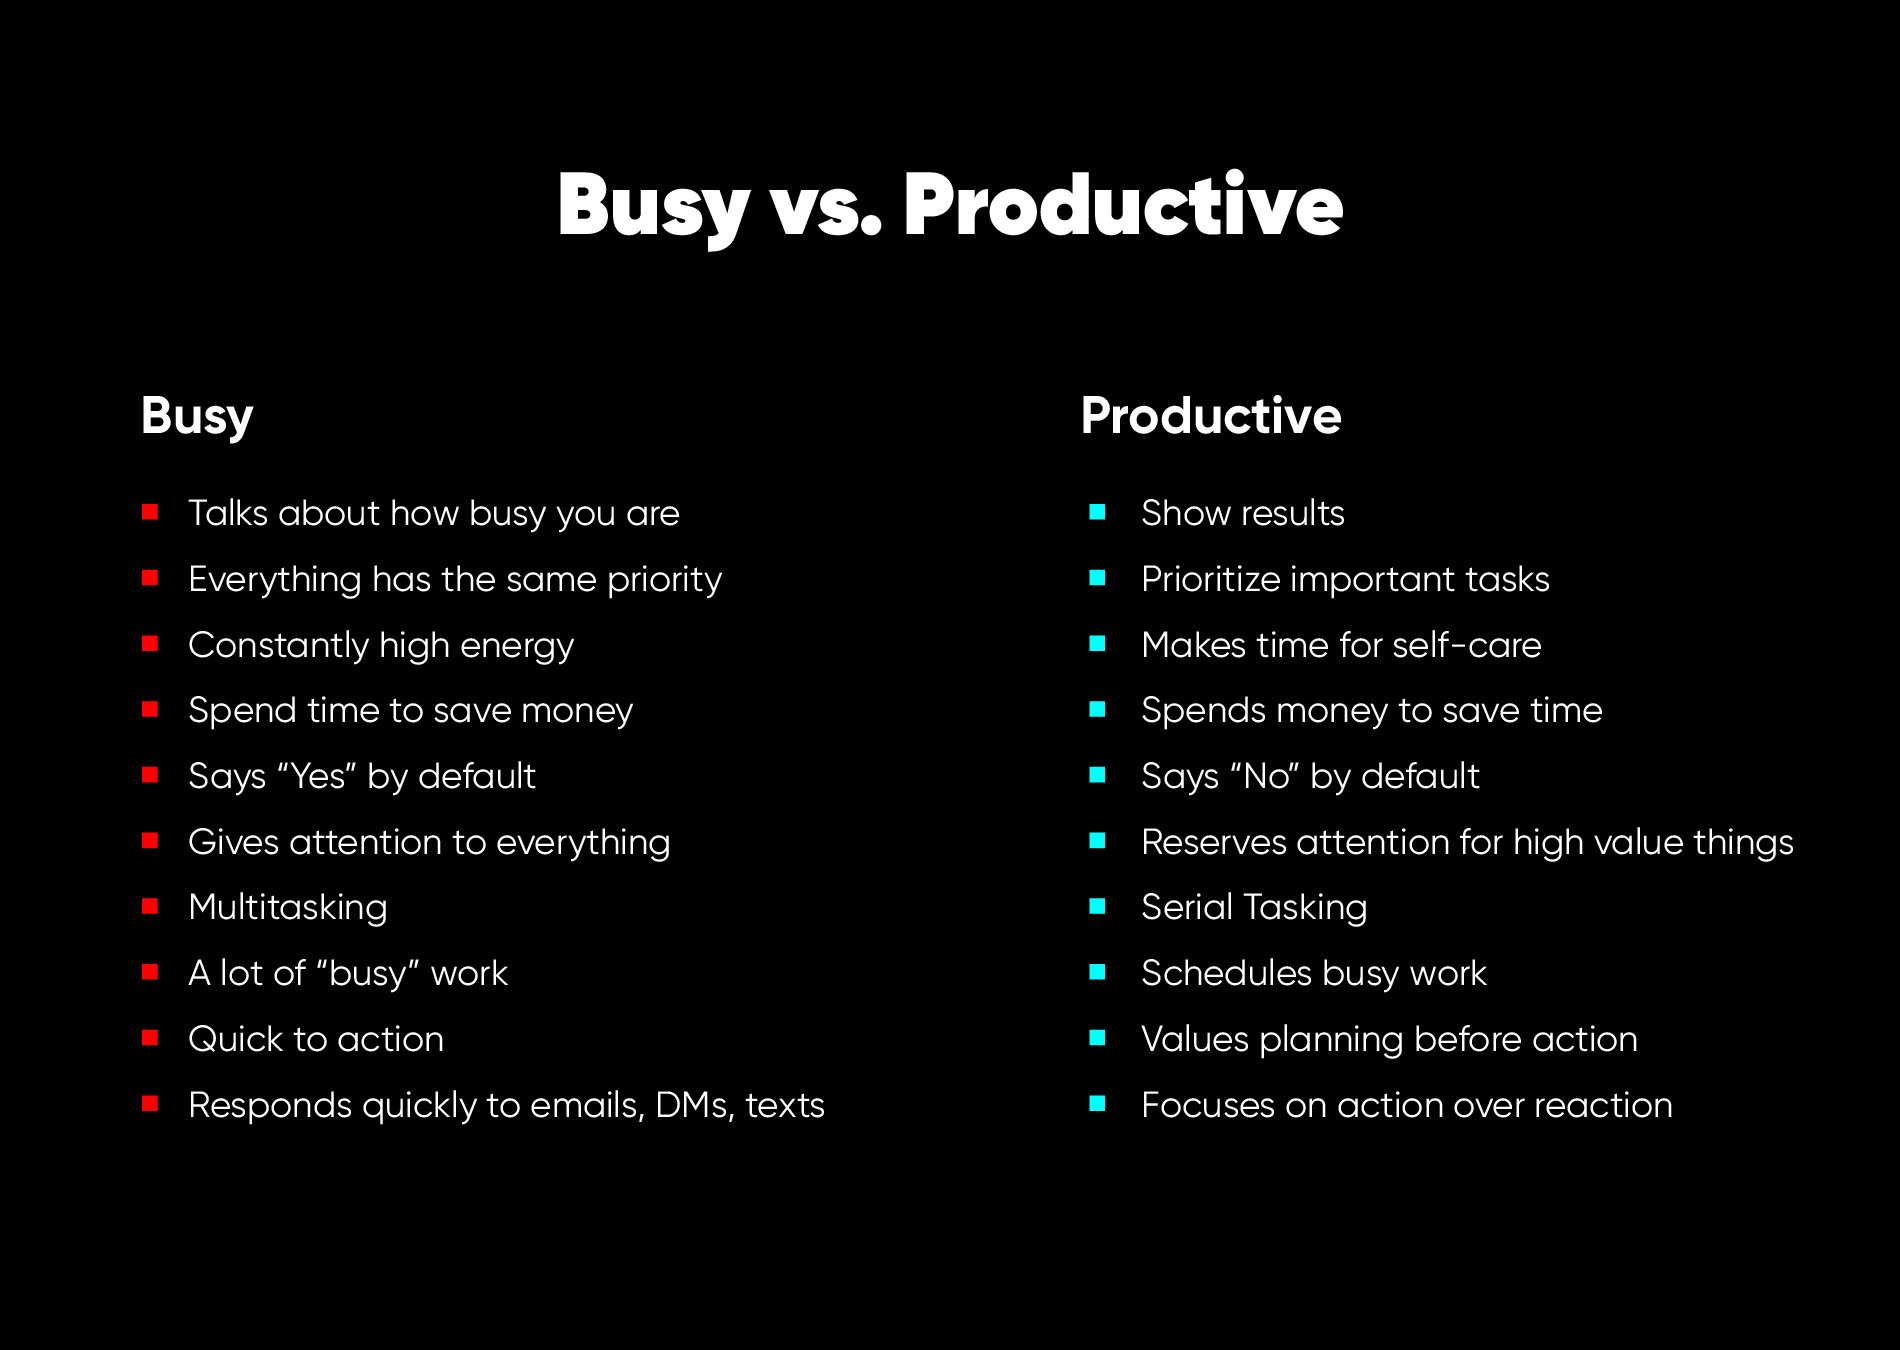 Busy versus Productive person comparison chart